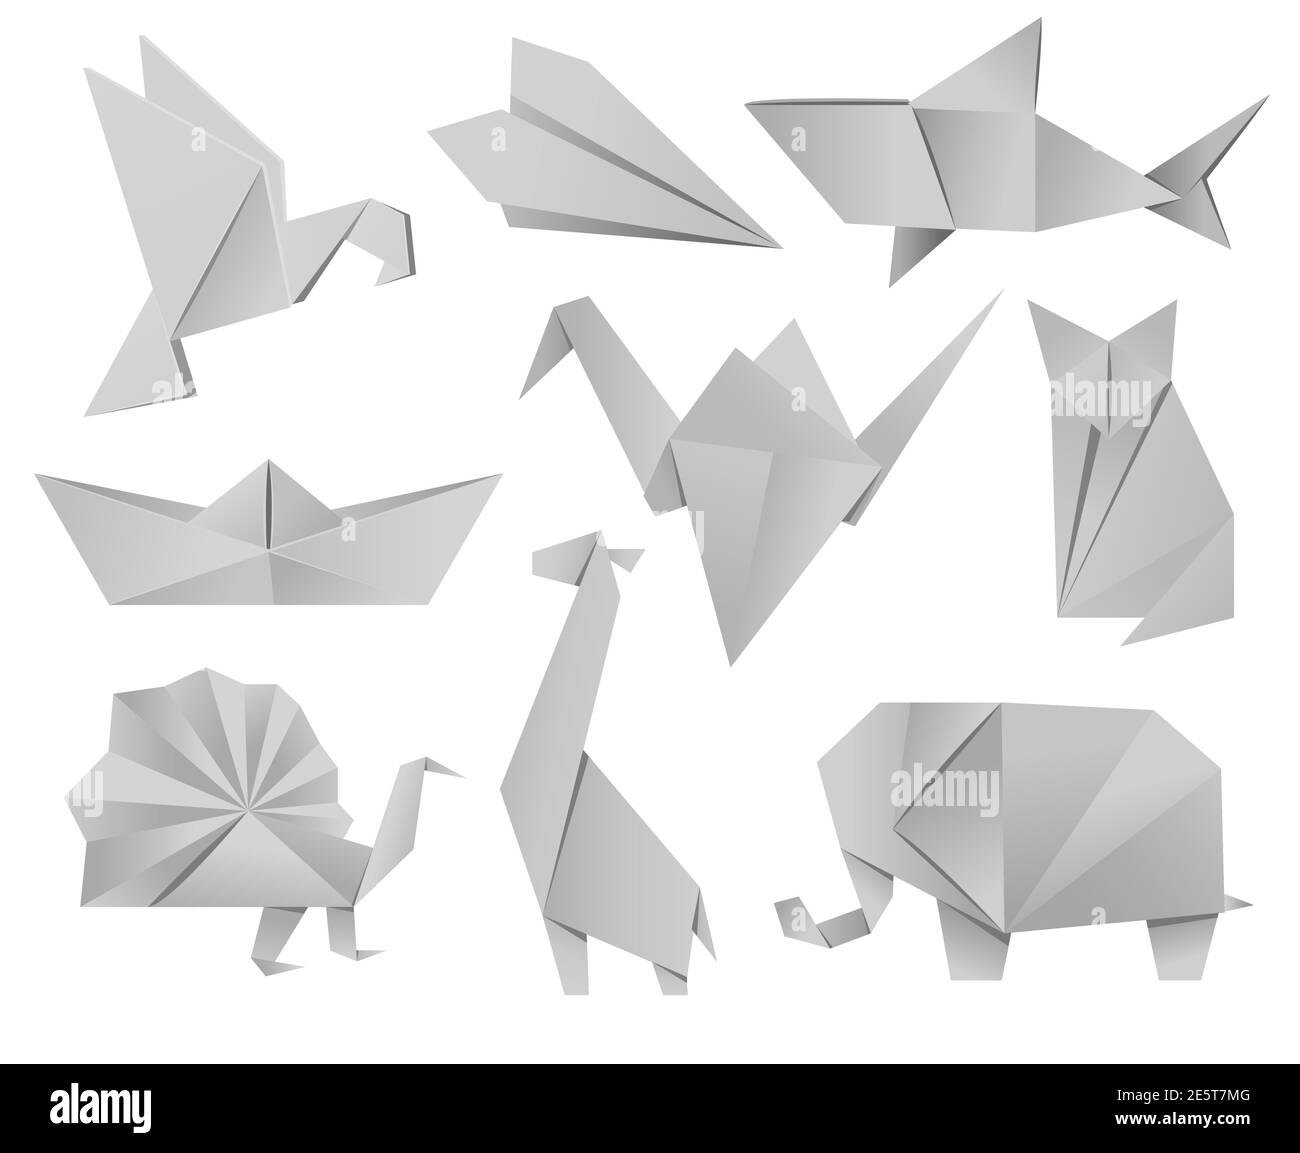 Origami animals set - bird, plane, crane, peacock, giraffe, boat, shark,  fox, elephant. The Japanese art of